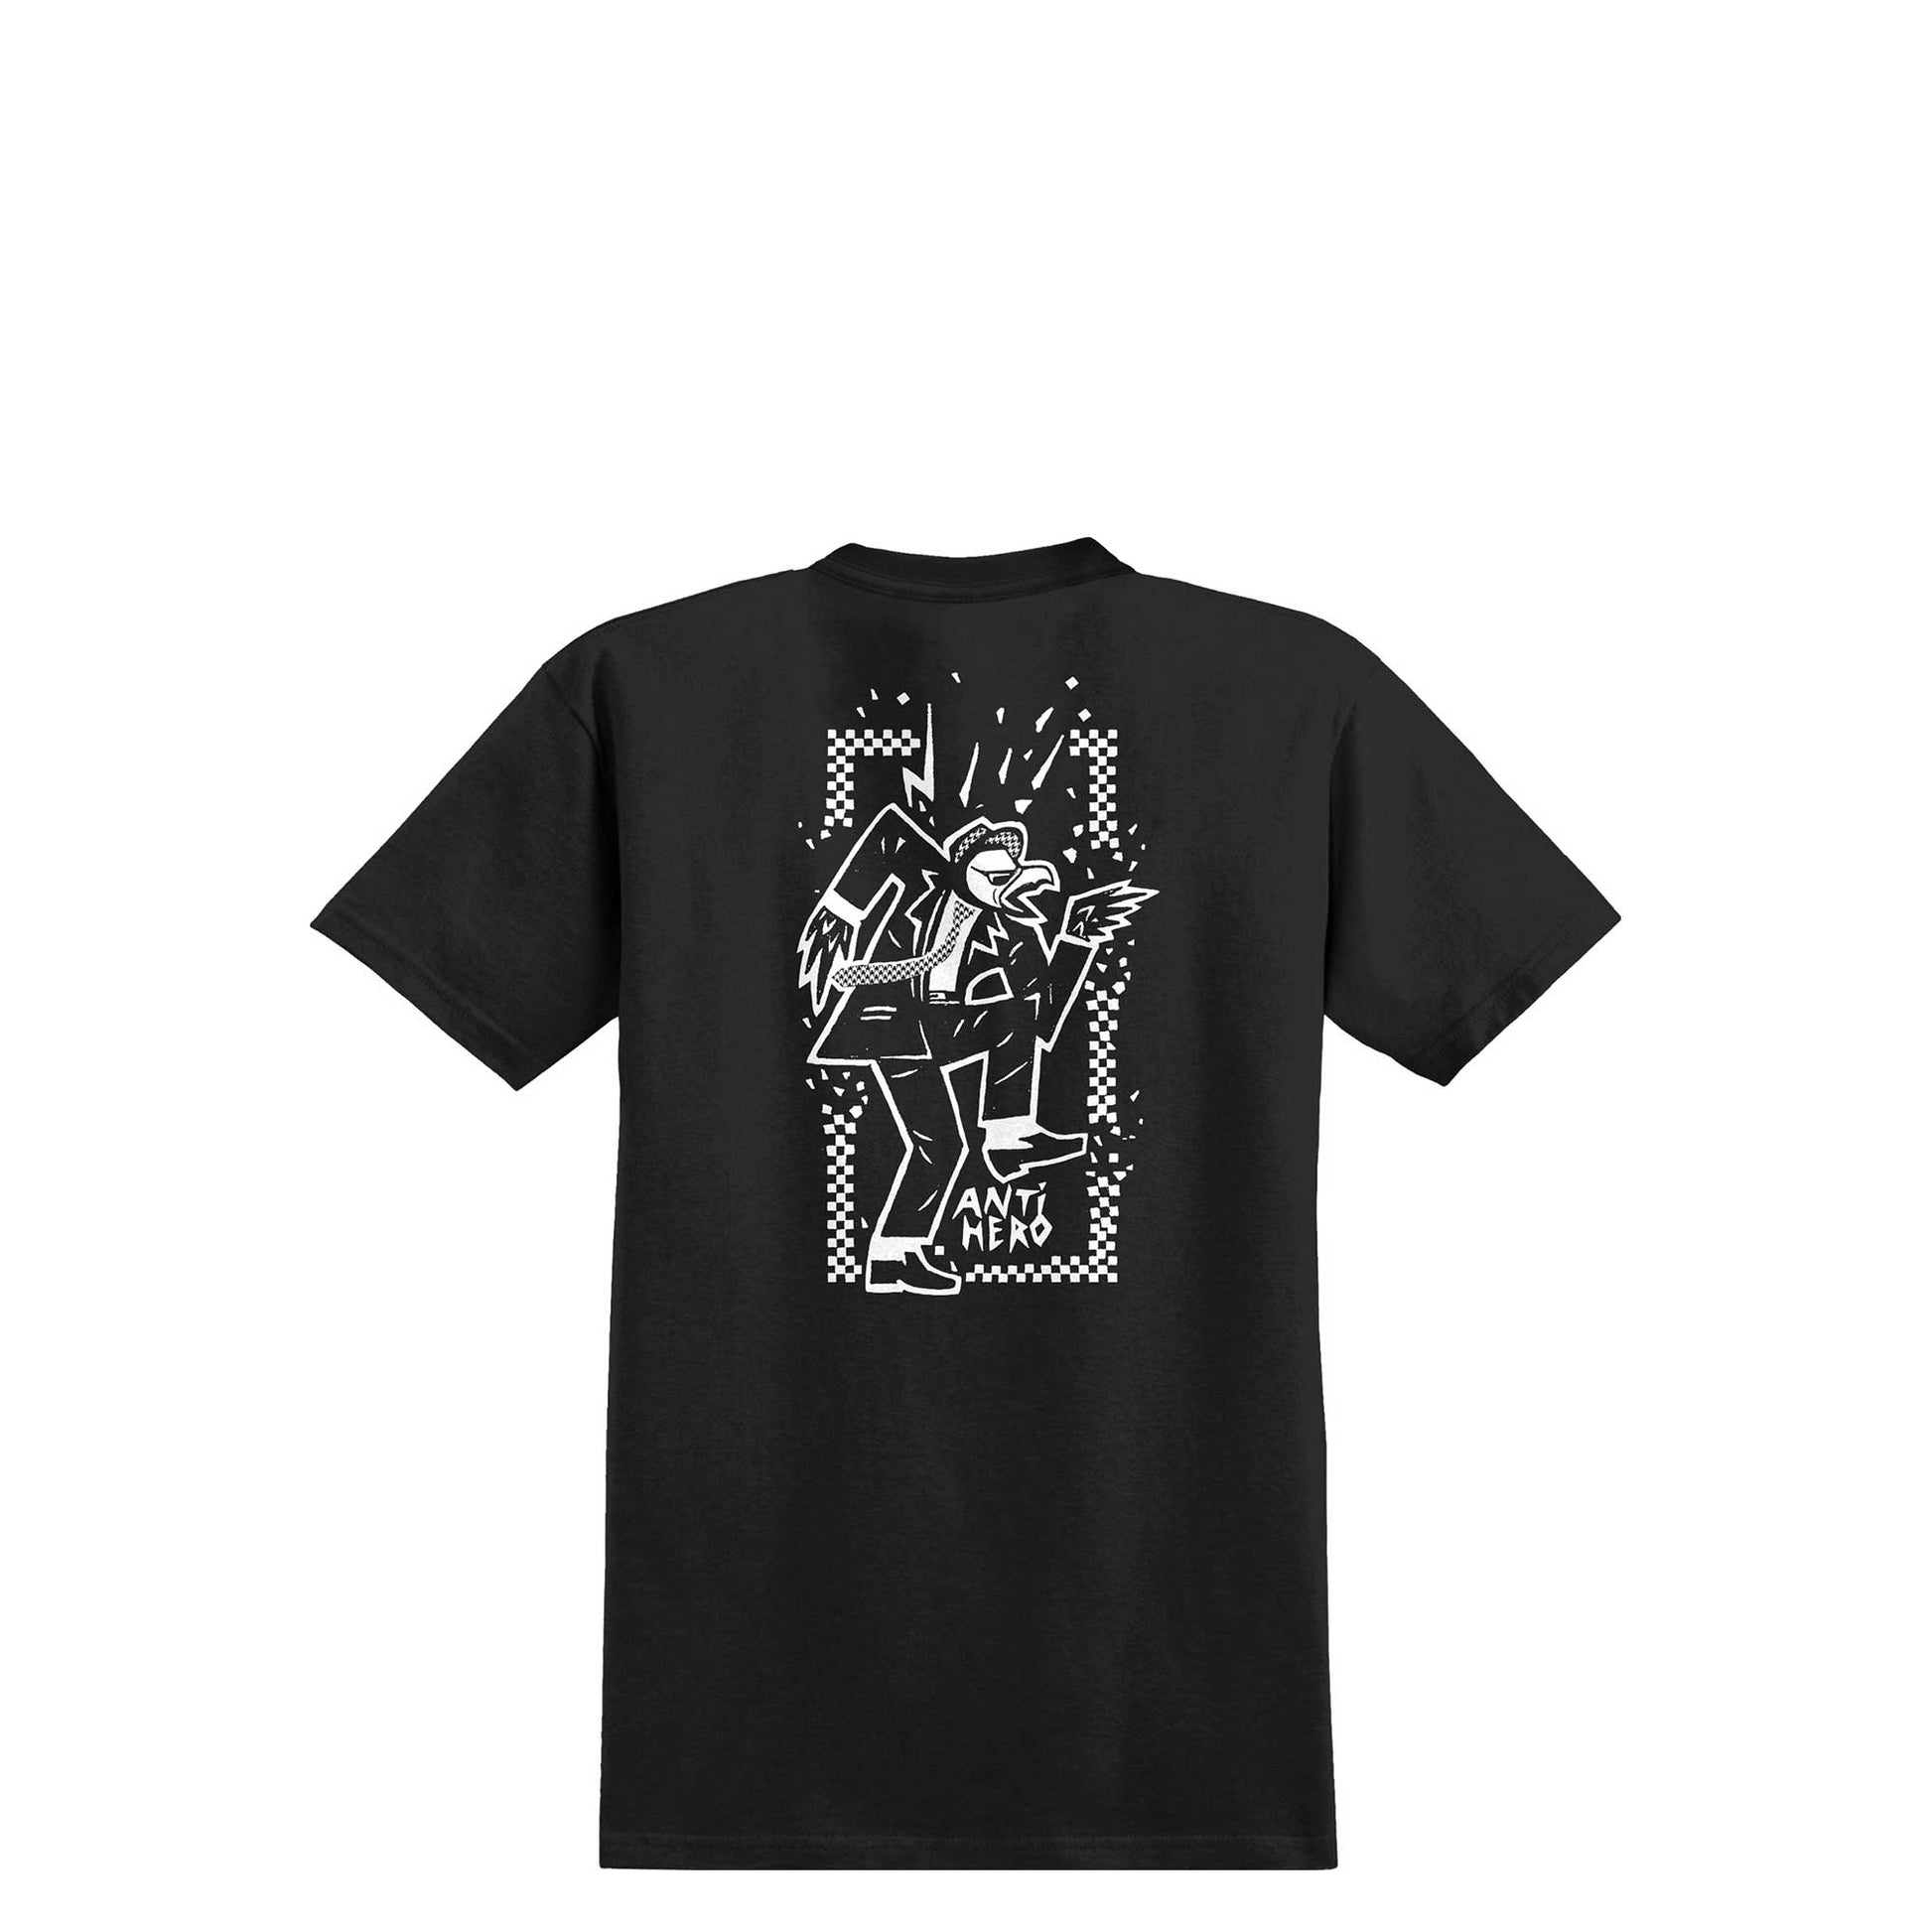 Anti Hero Rude Bwoy T-Shirt, black w white prints - Tiki Room Skateboards - 1